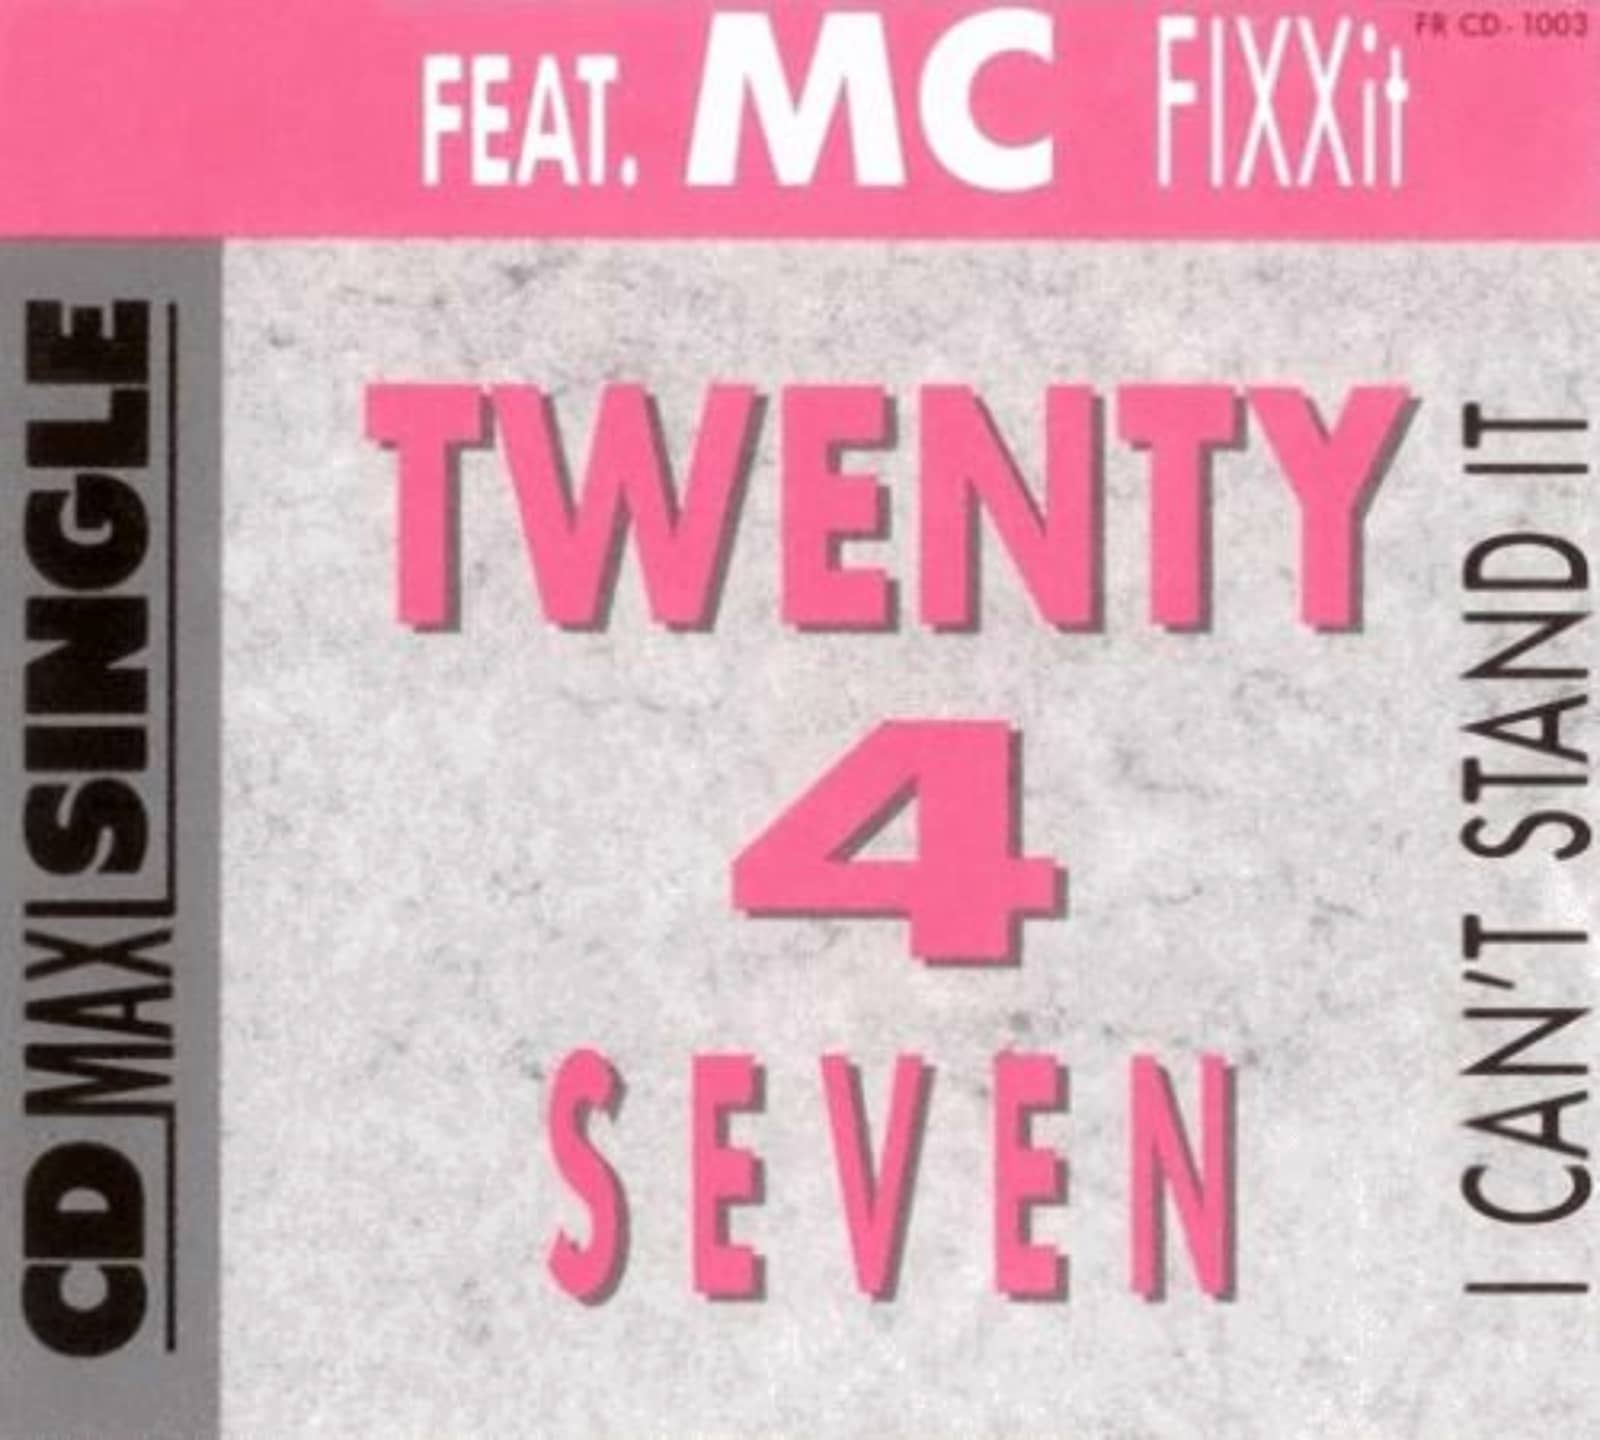 It was twenty years. MC Fixx it. Twenty 4 Seven - i can't Stand it. Twenty 4 Seven. Maxx no more i can't Stand it.